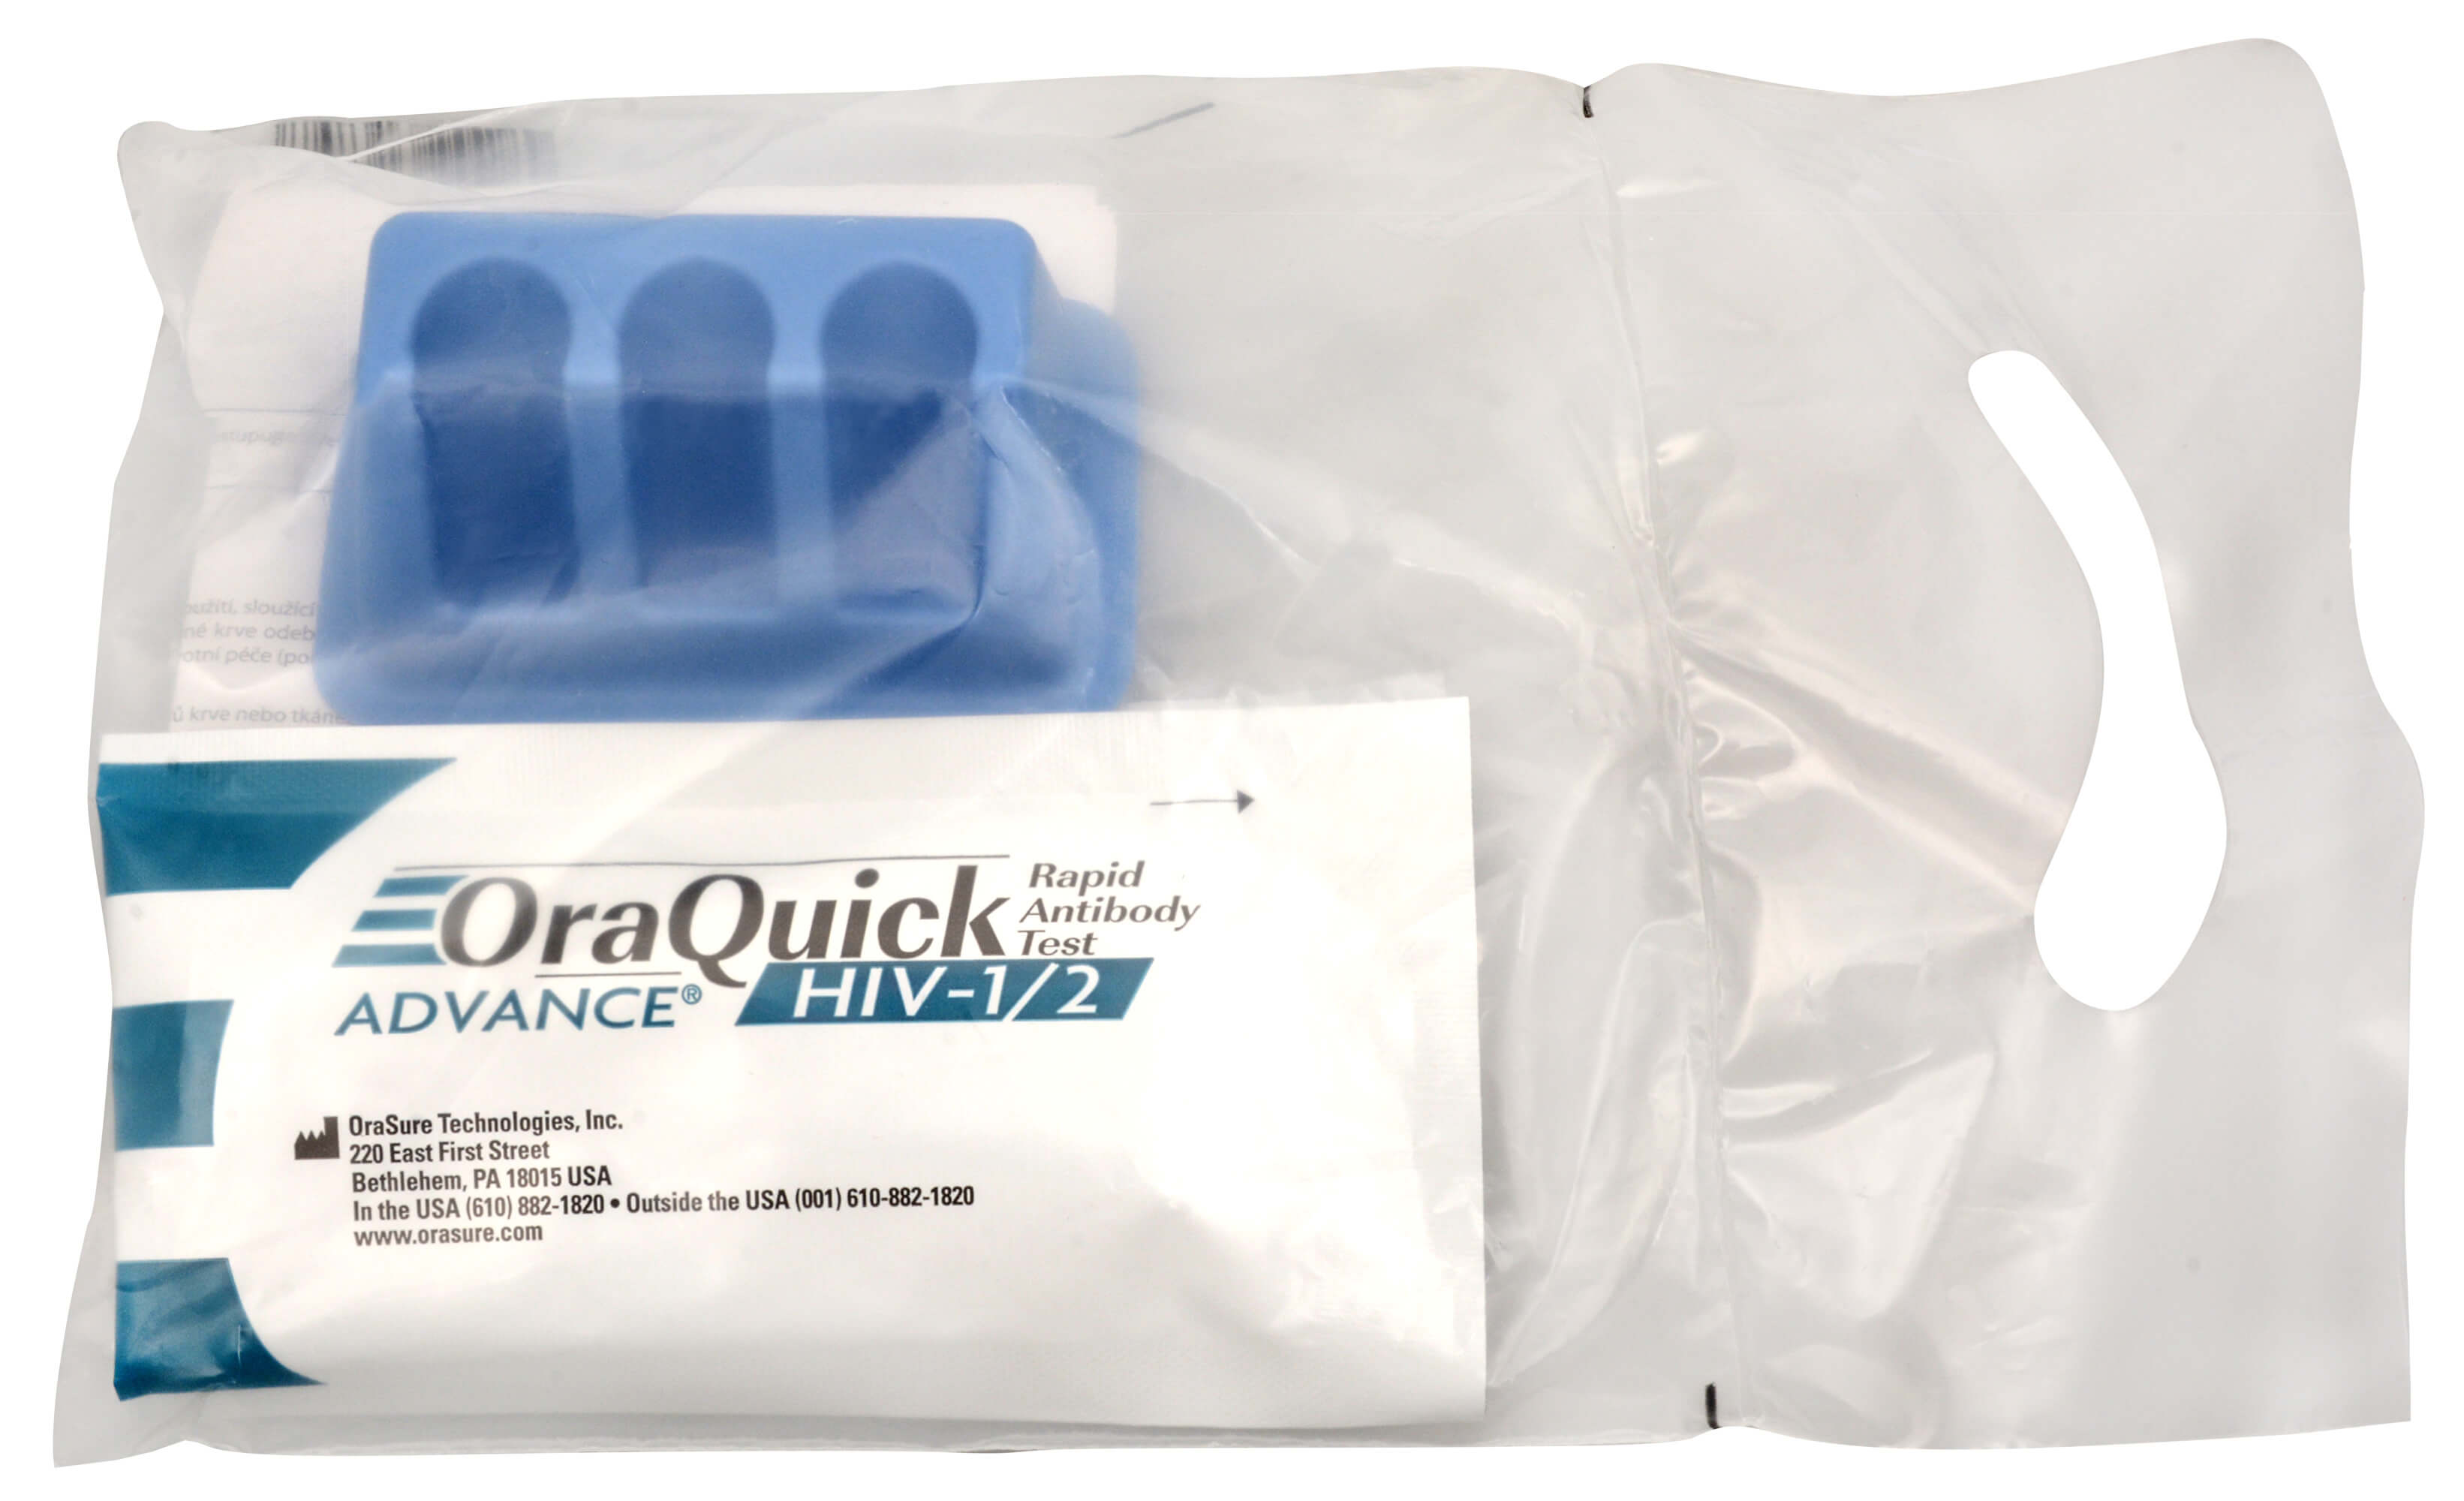 OraQuick OraQuick ADVANCE HIV-1/2 Rapid Antib. test